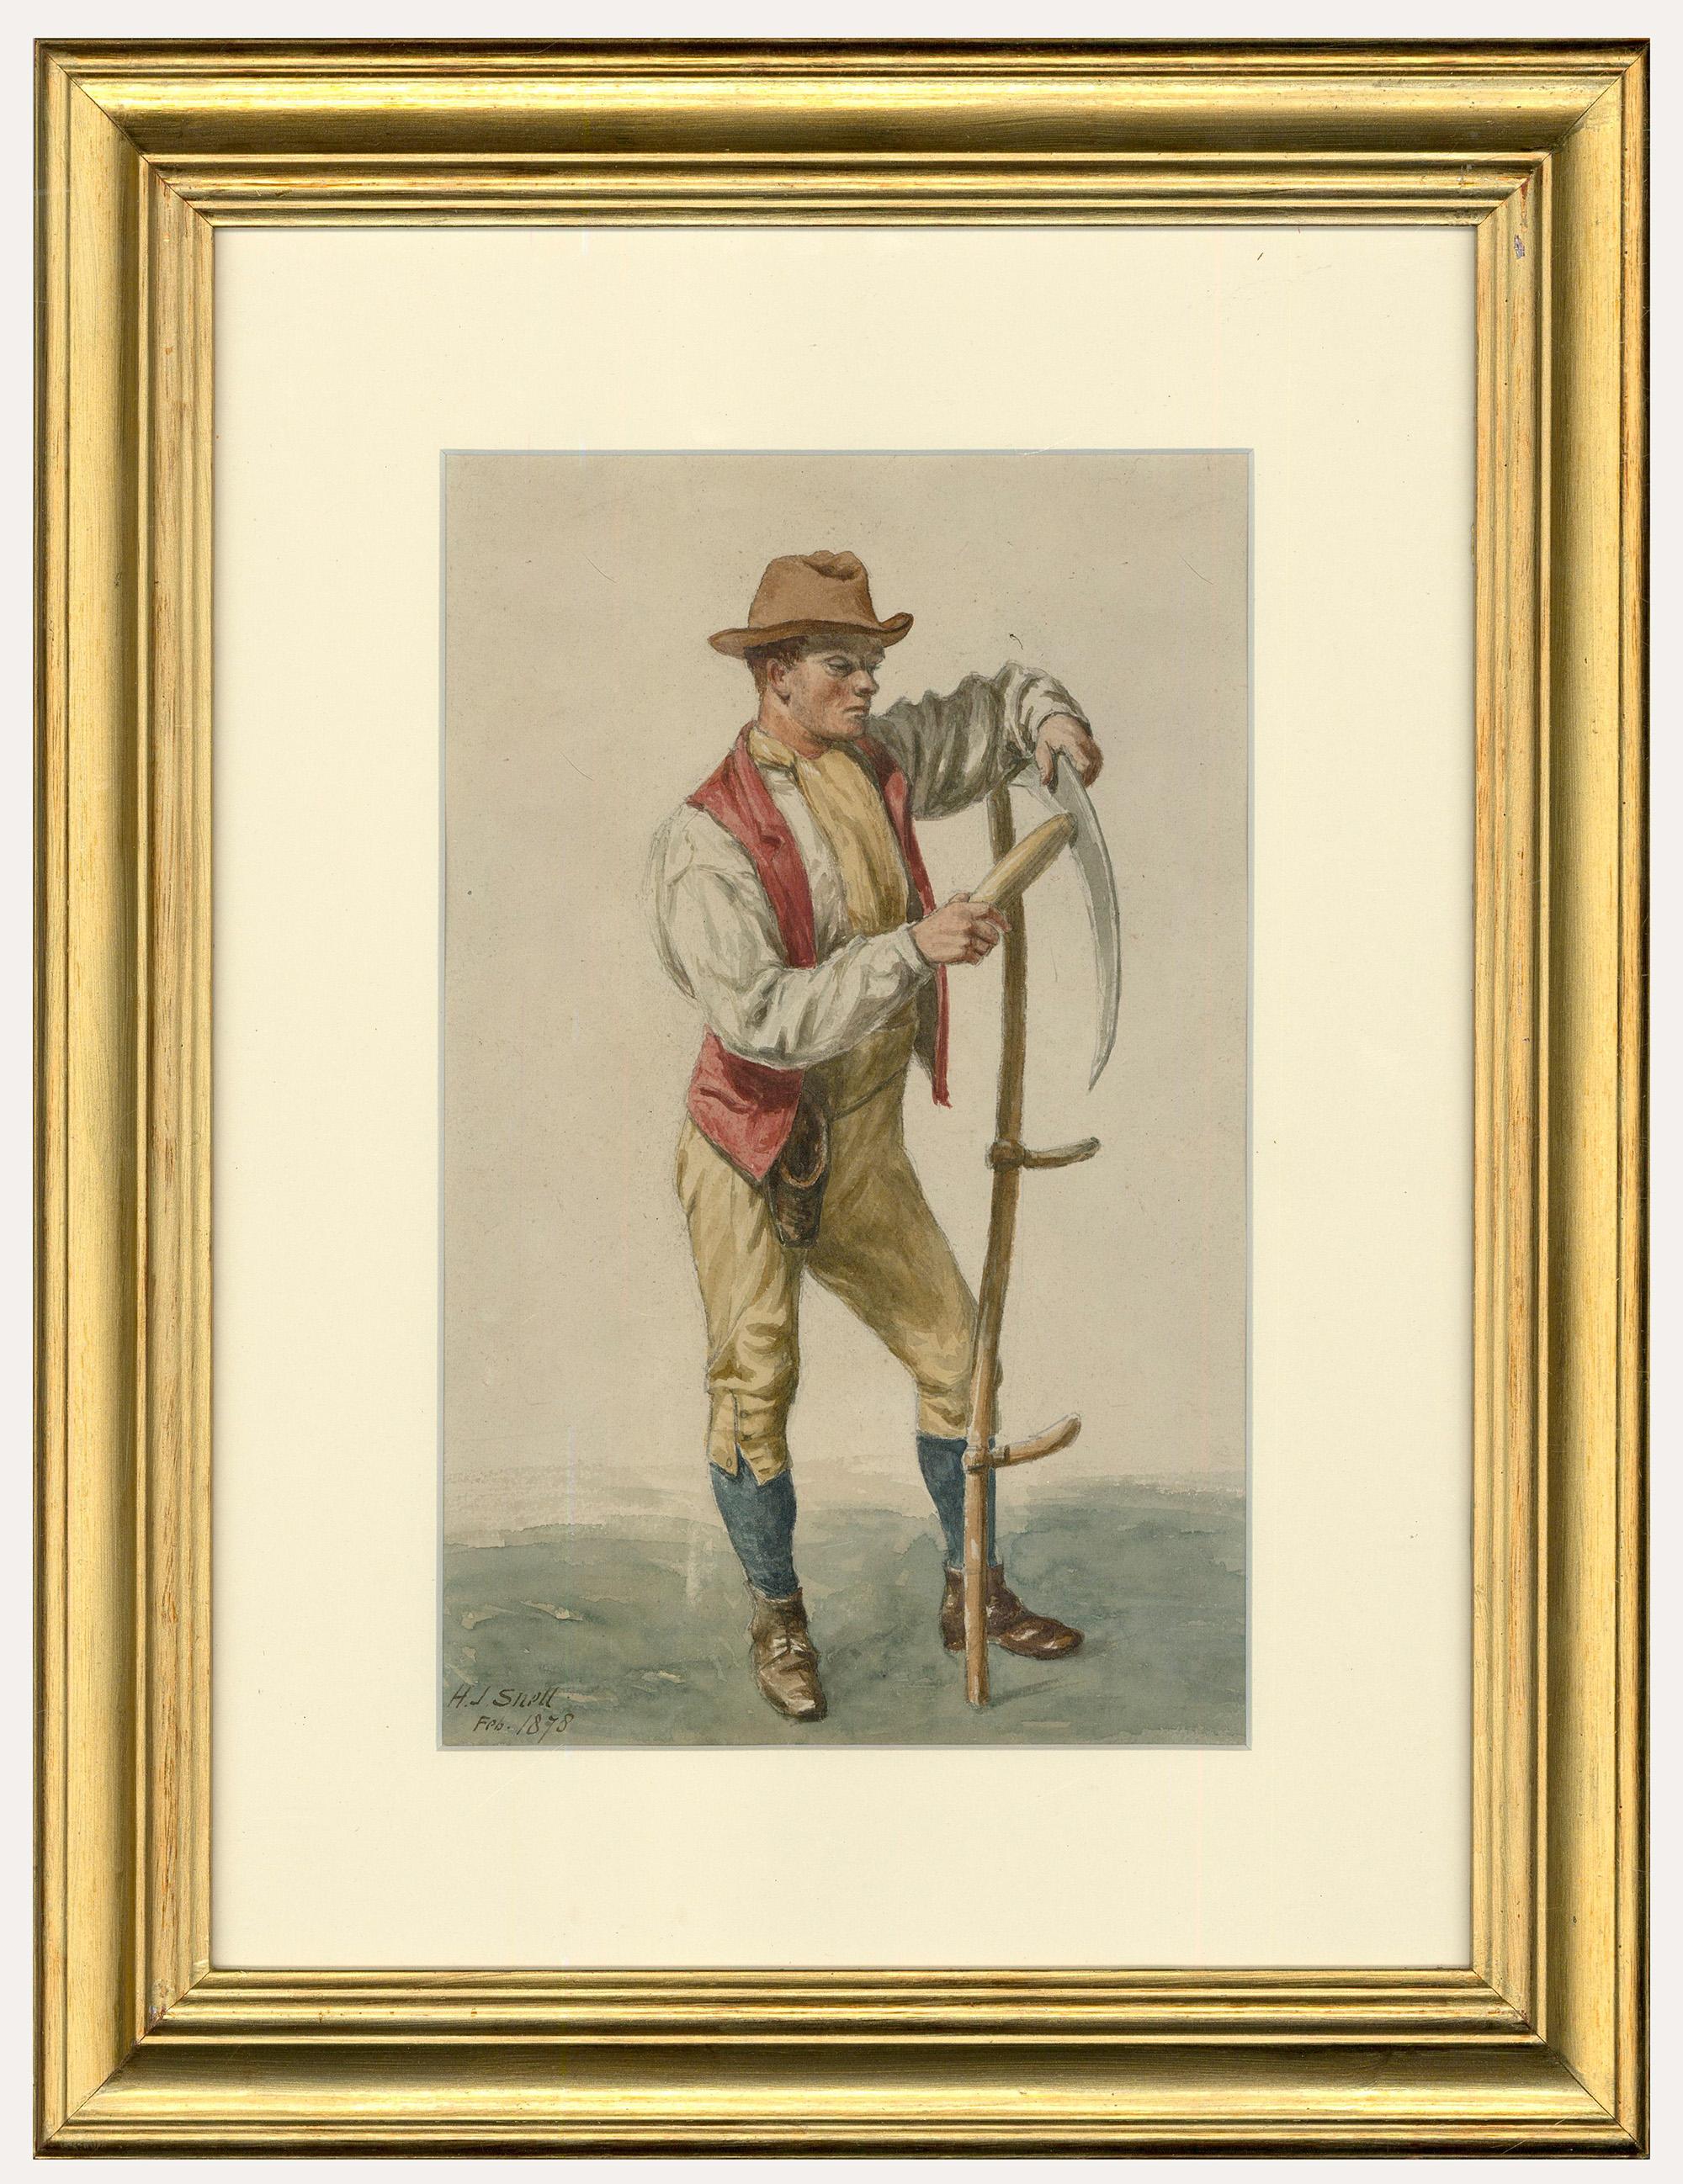 Unknown Portrait - H.J. Snell - English School 1878 Watercolour, Farmer with a Scythe